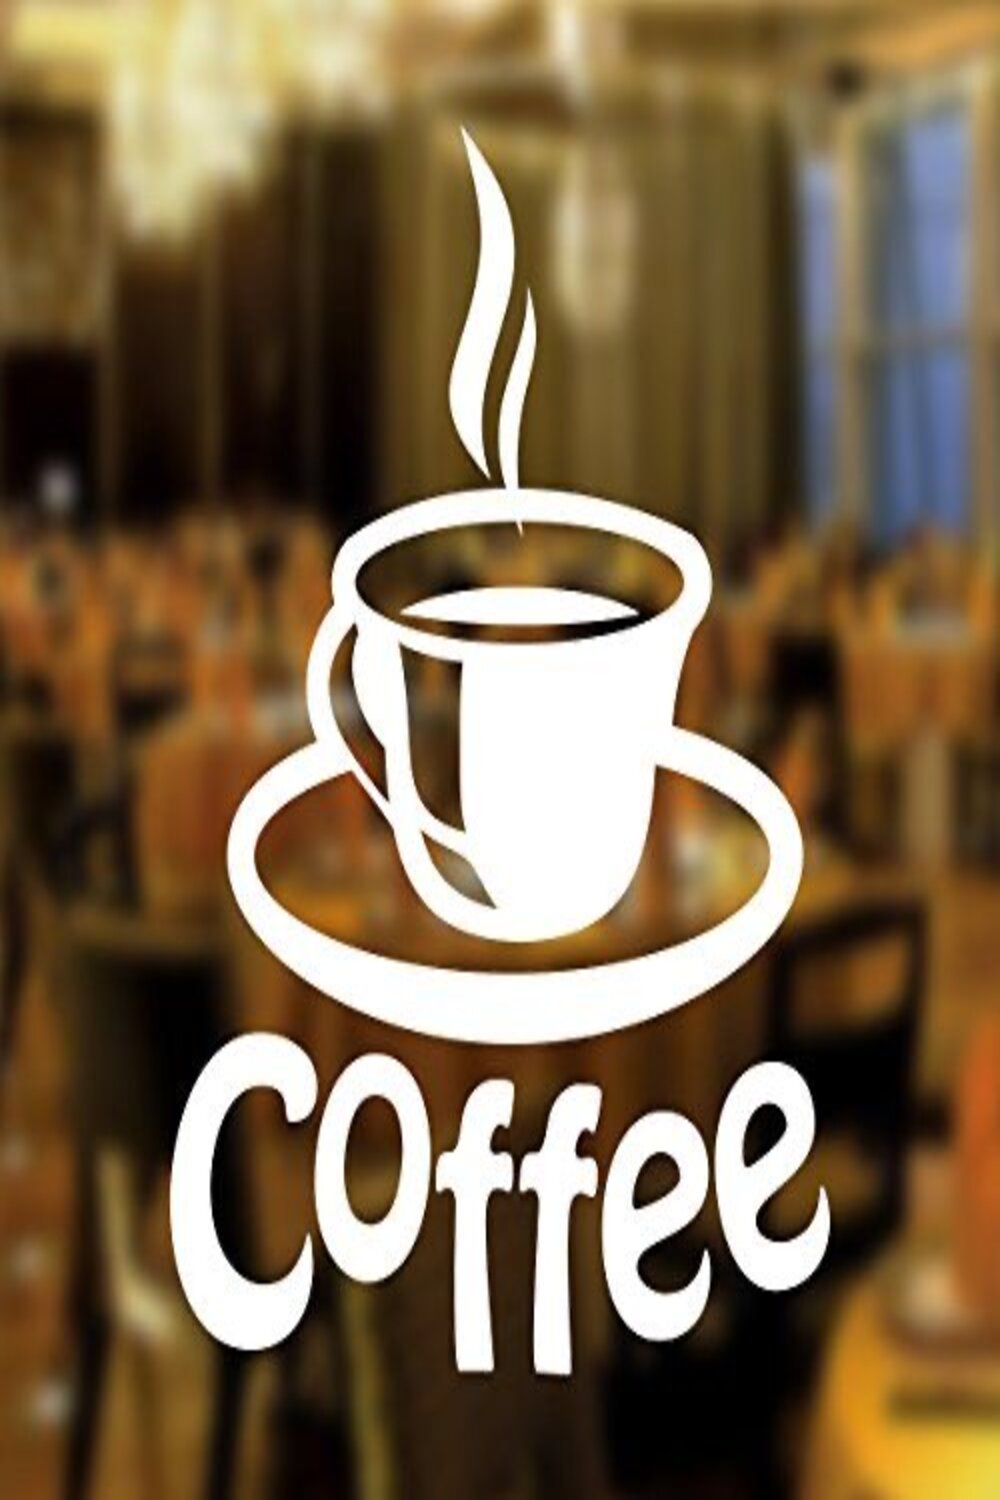 Coffe logo pinterest preview image.